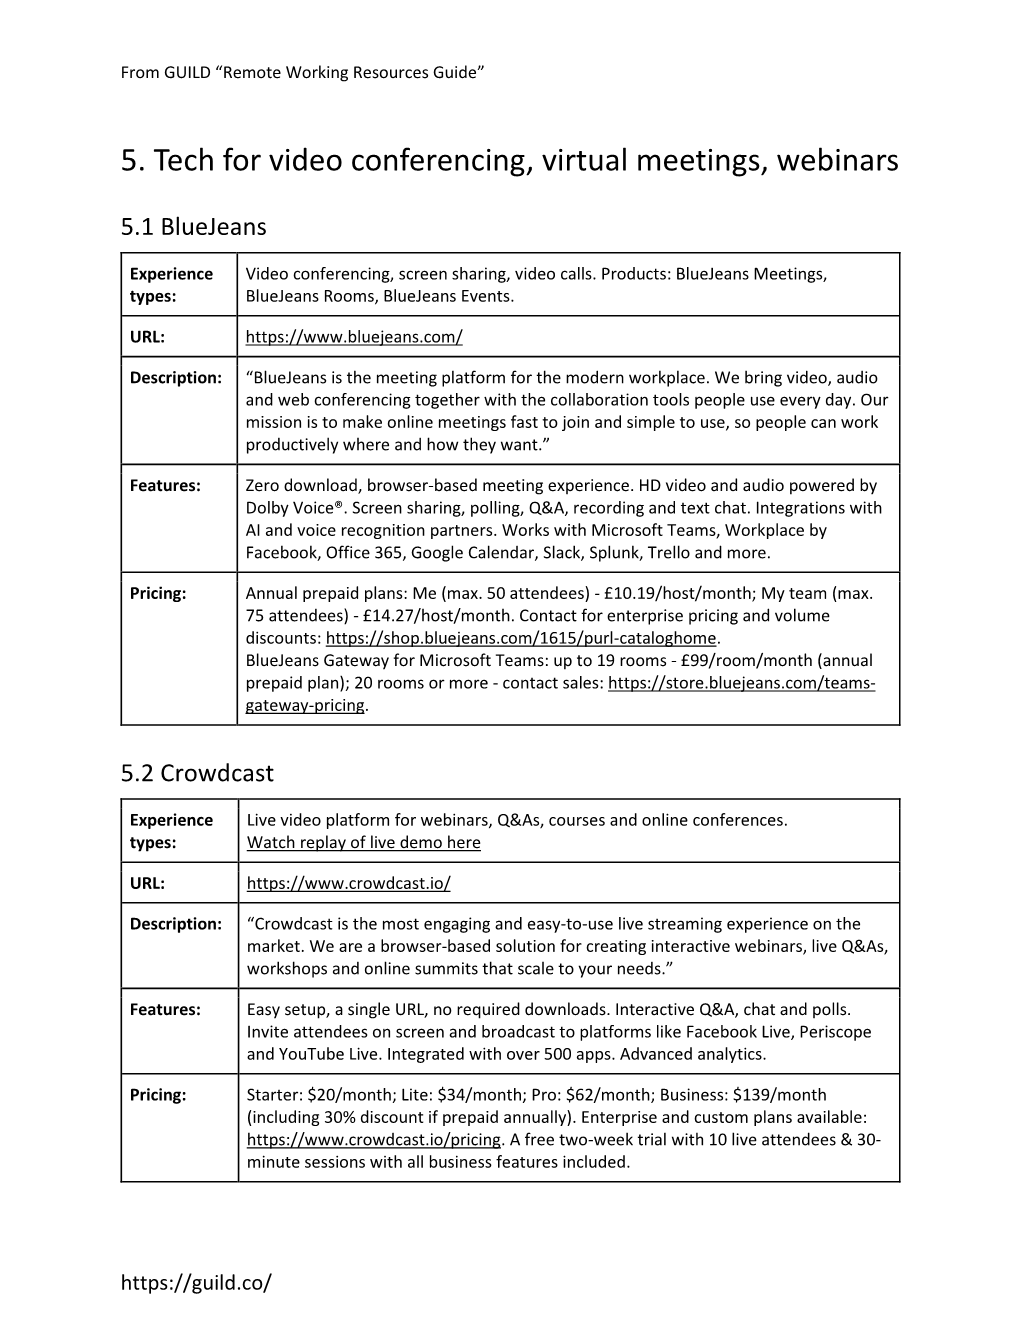 5. Tech for Video Conferencing, Virtual Meetings, Webinars